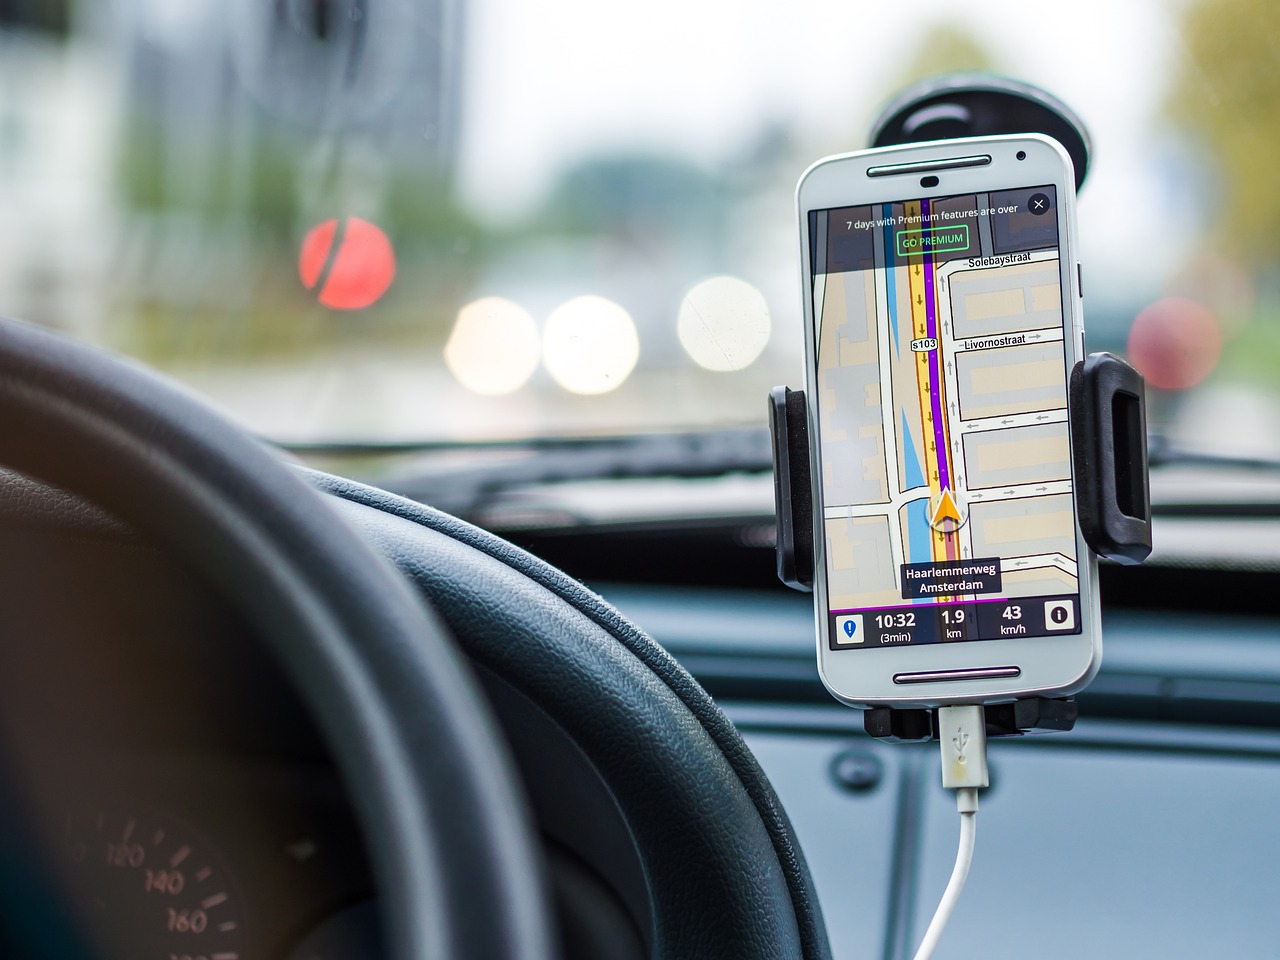 GPS Tracker in car | Source: Pixabay